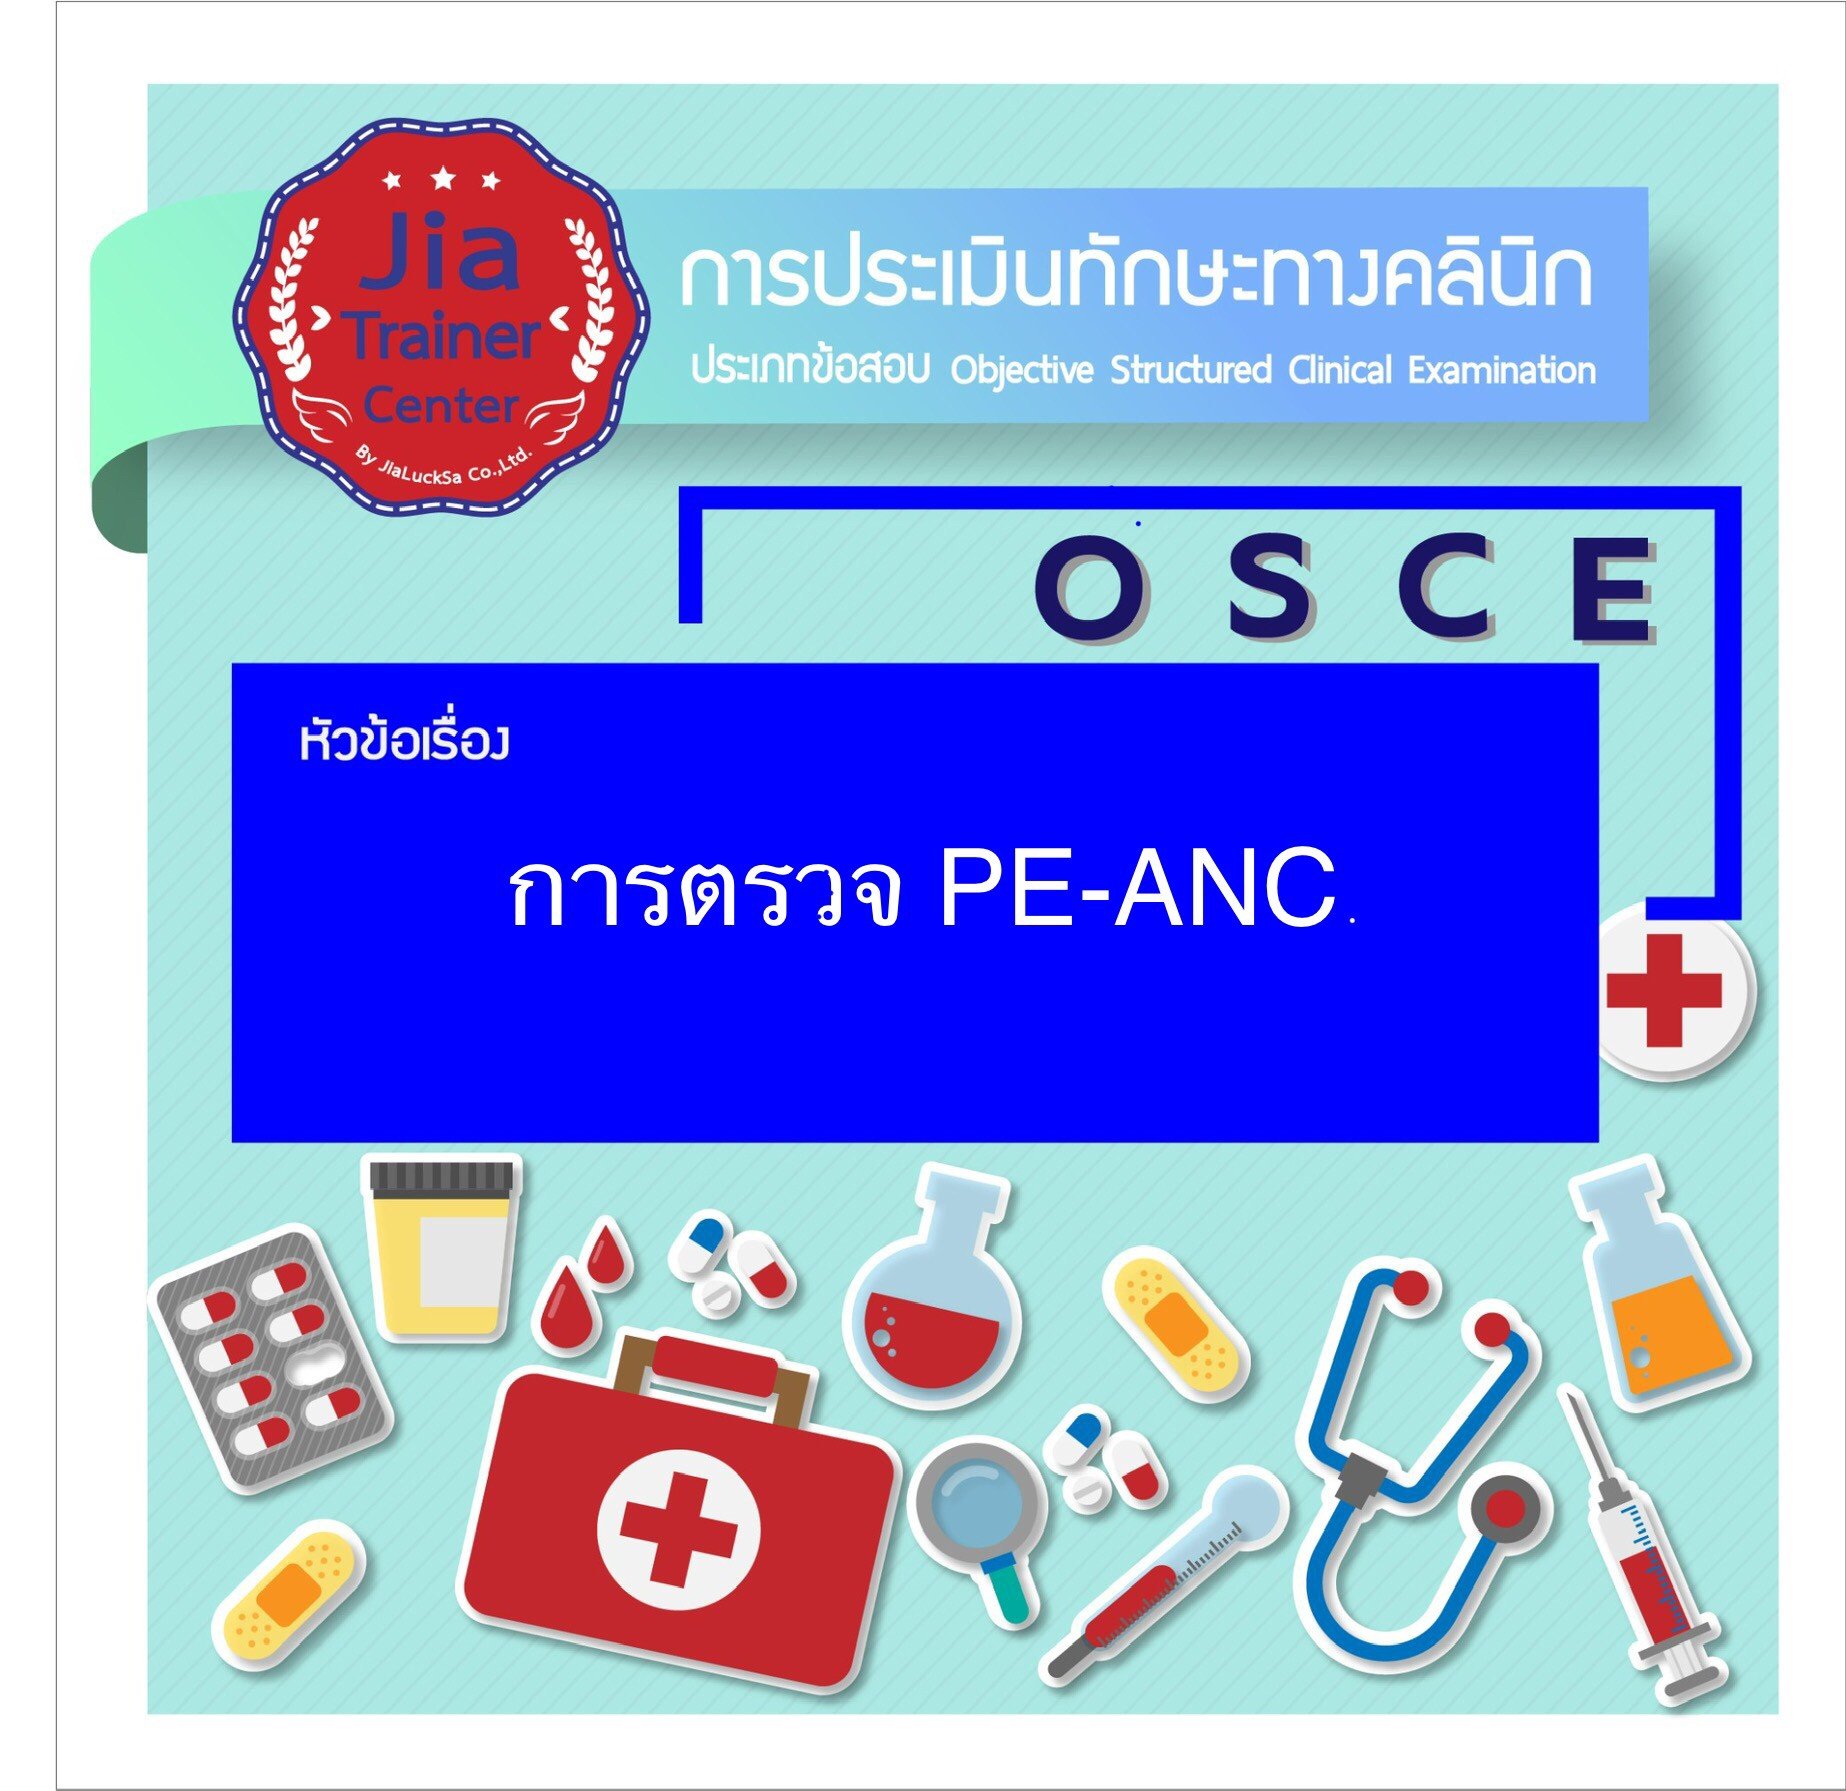 Osce-การตรวจ PE-ANC